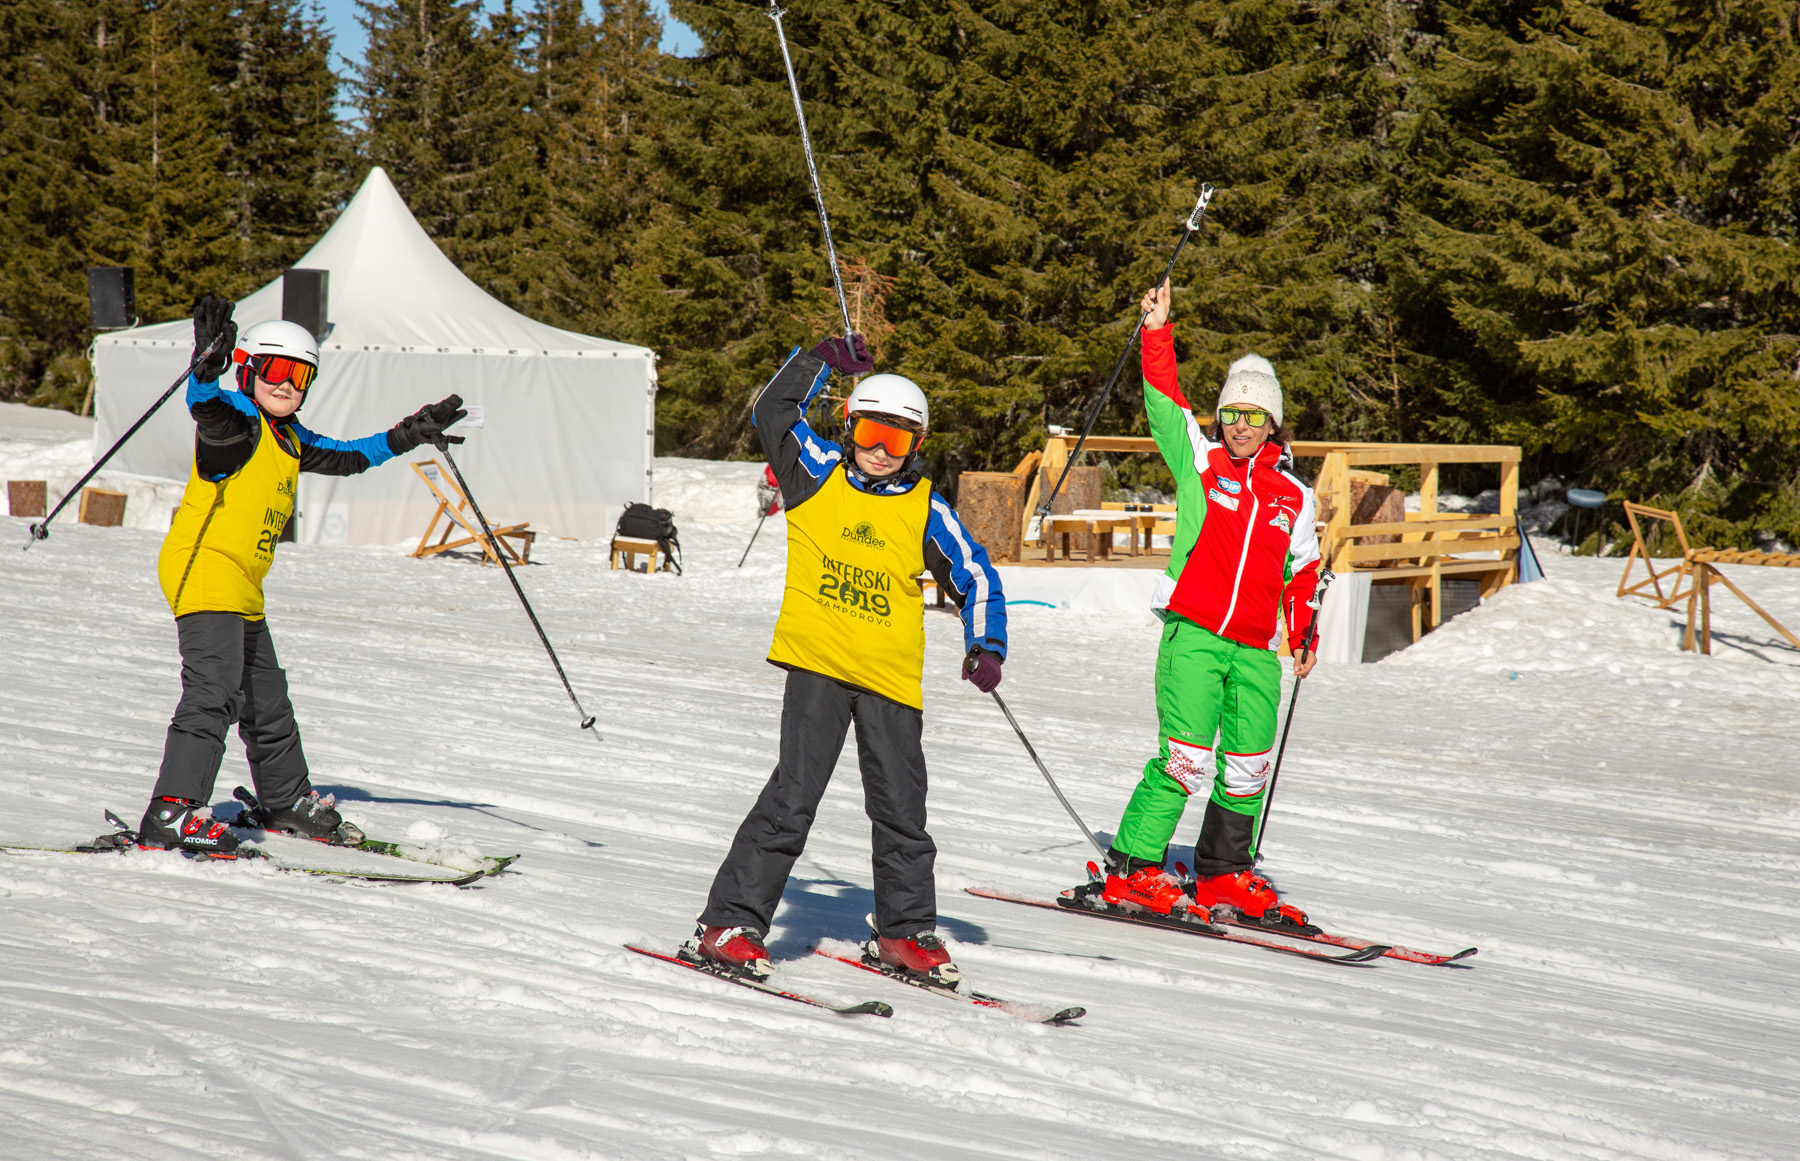 Interski ski school students with their instructor at Interski 2019